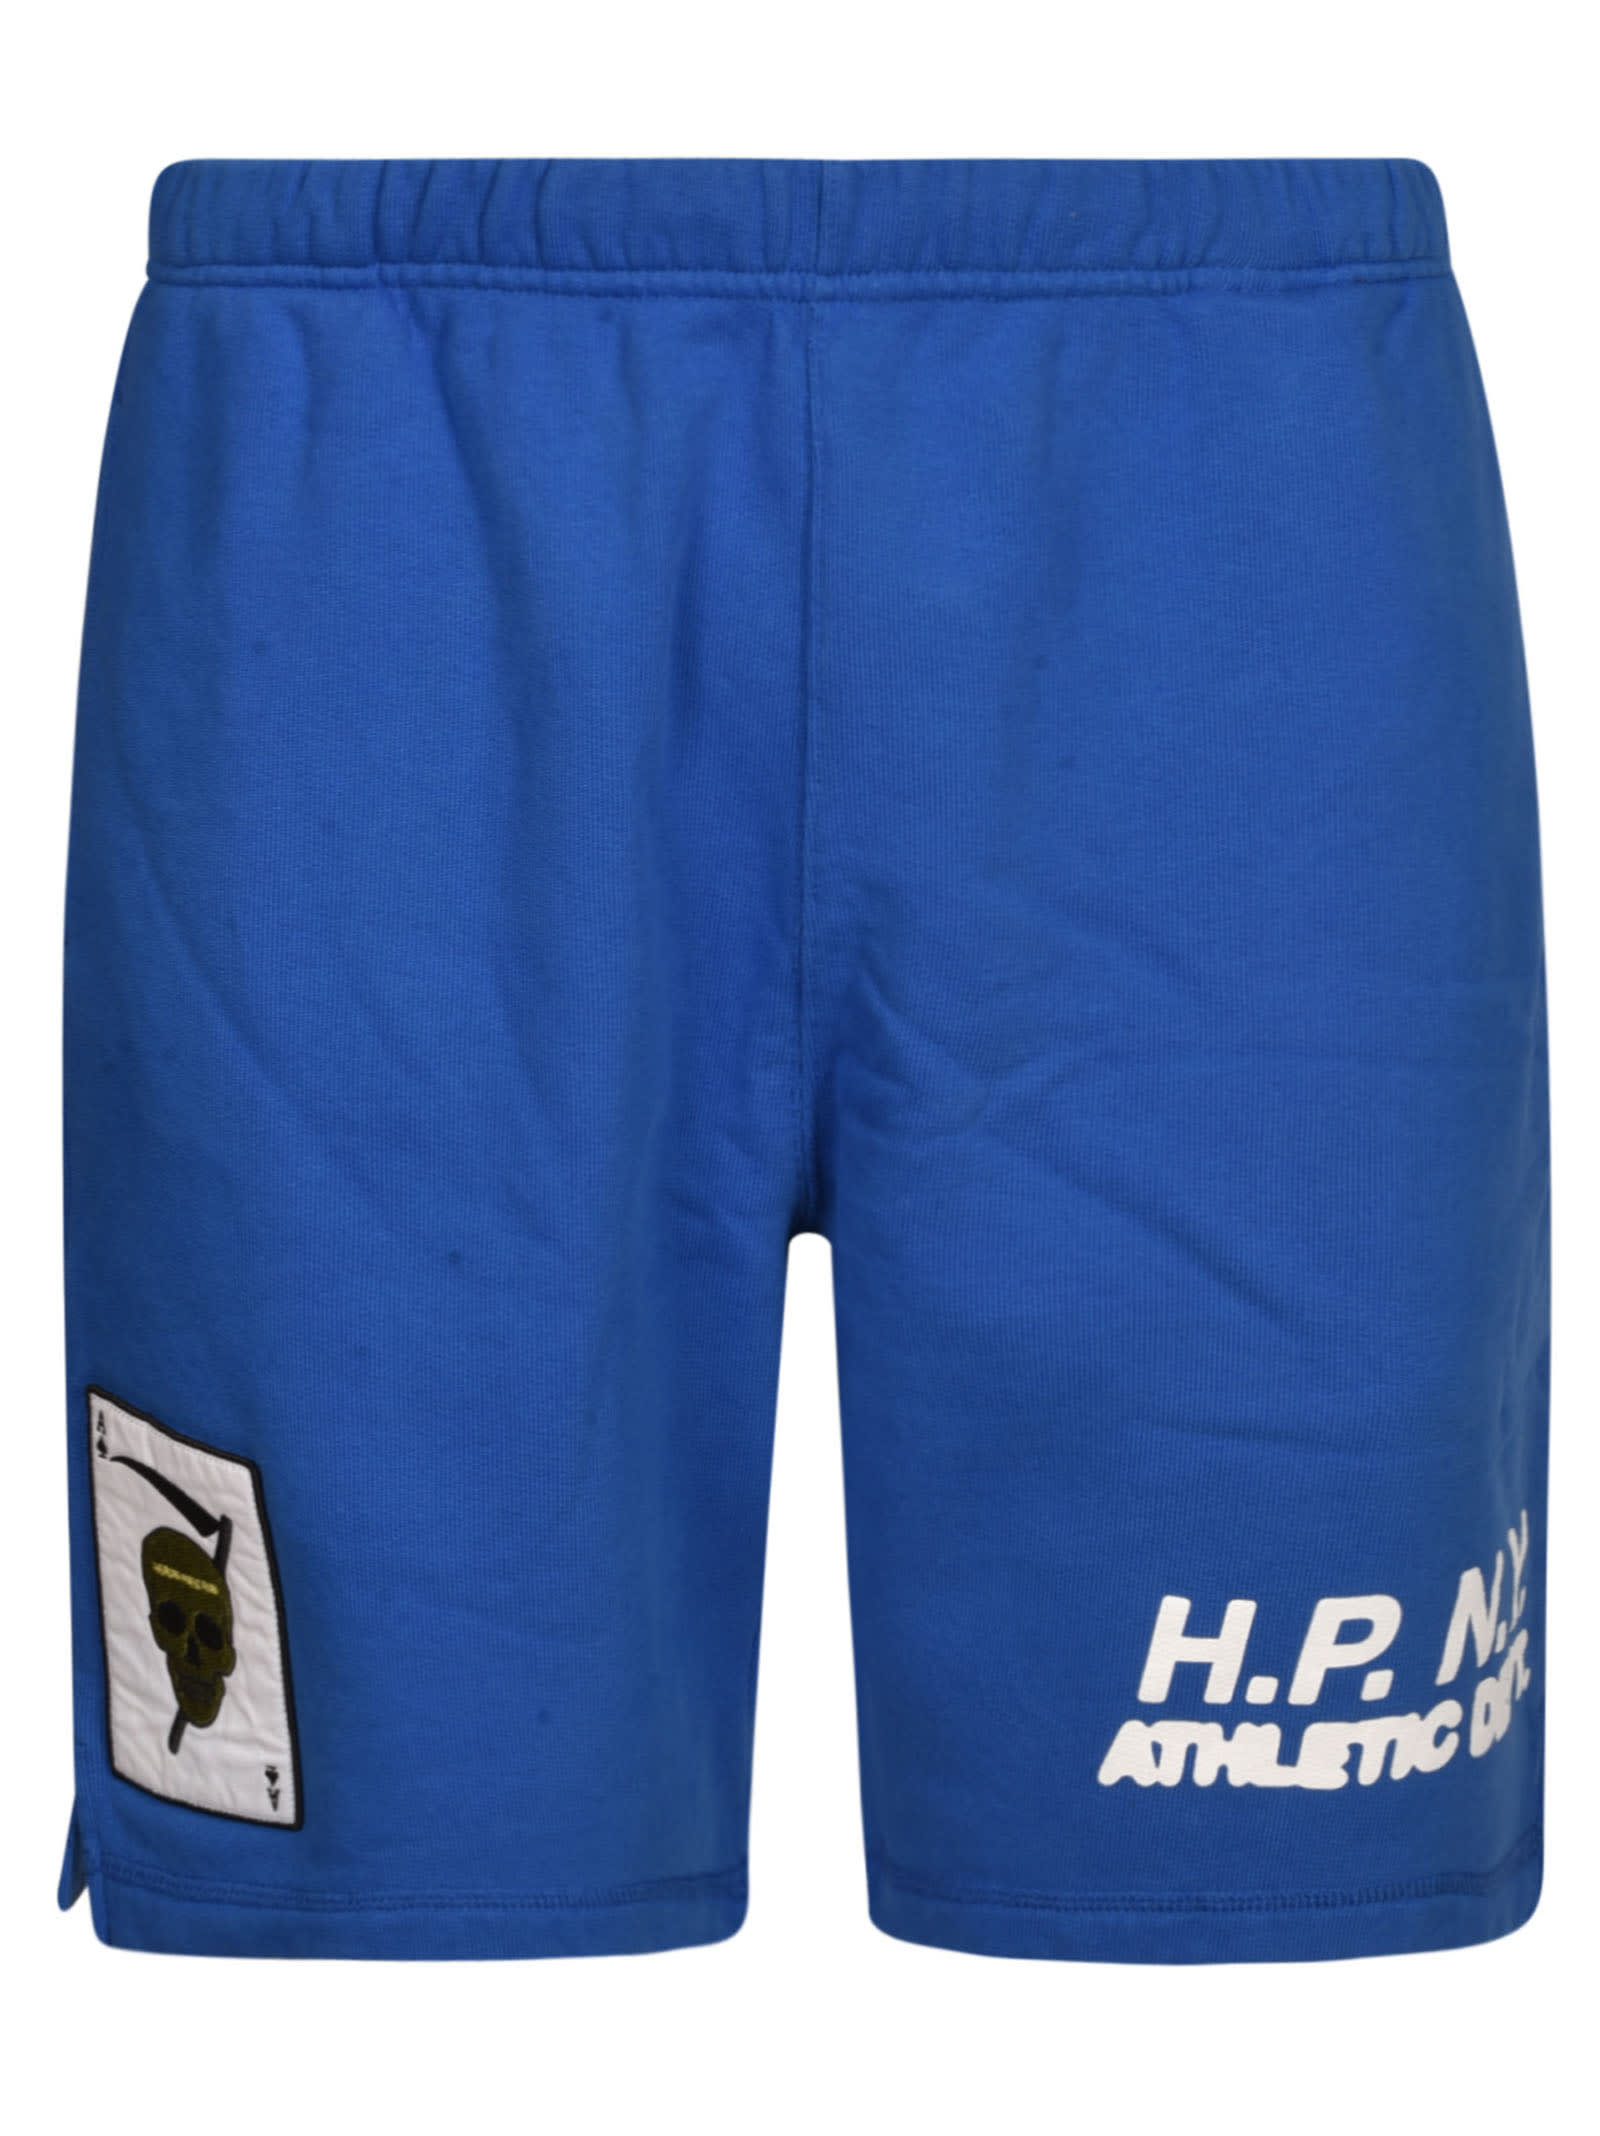 HERON PRESTON hpny Cotton Shorts